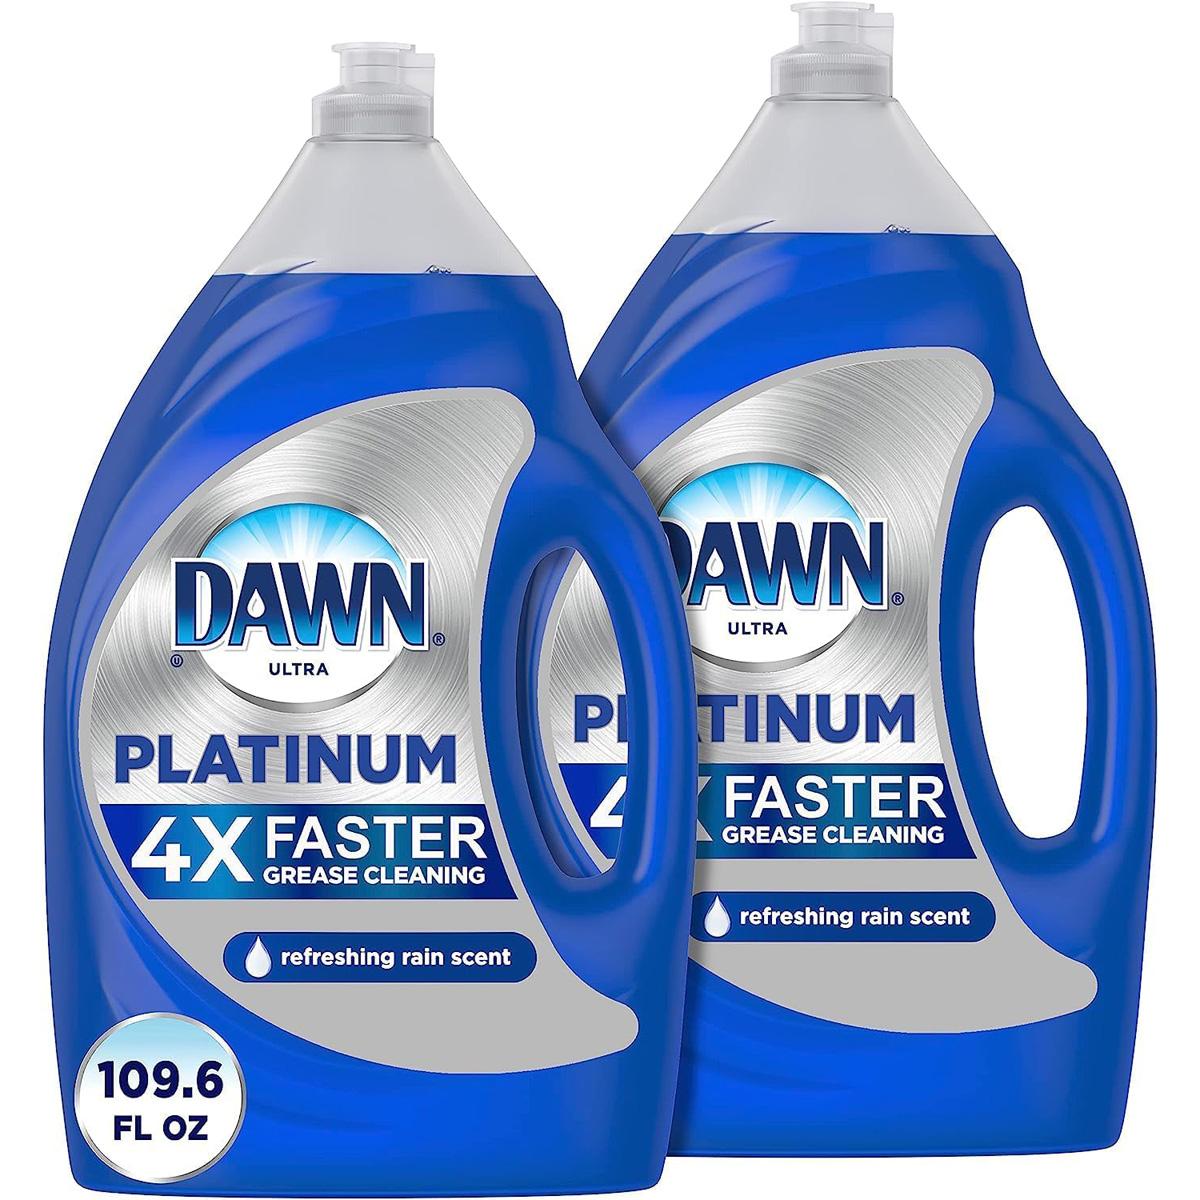 Dawn Platinum Dish Soap Liquid 6 Pack + $15 Credit for $51.01 Shipped